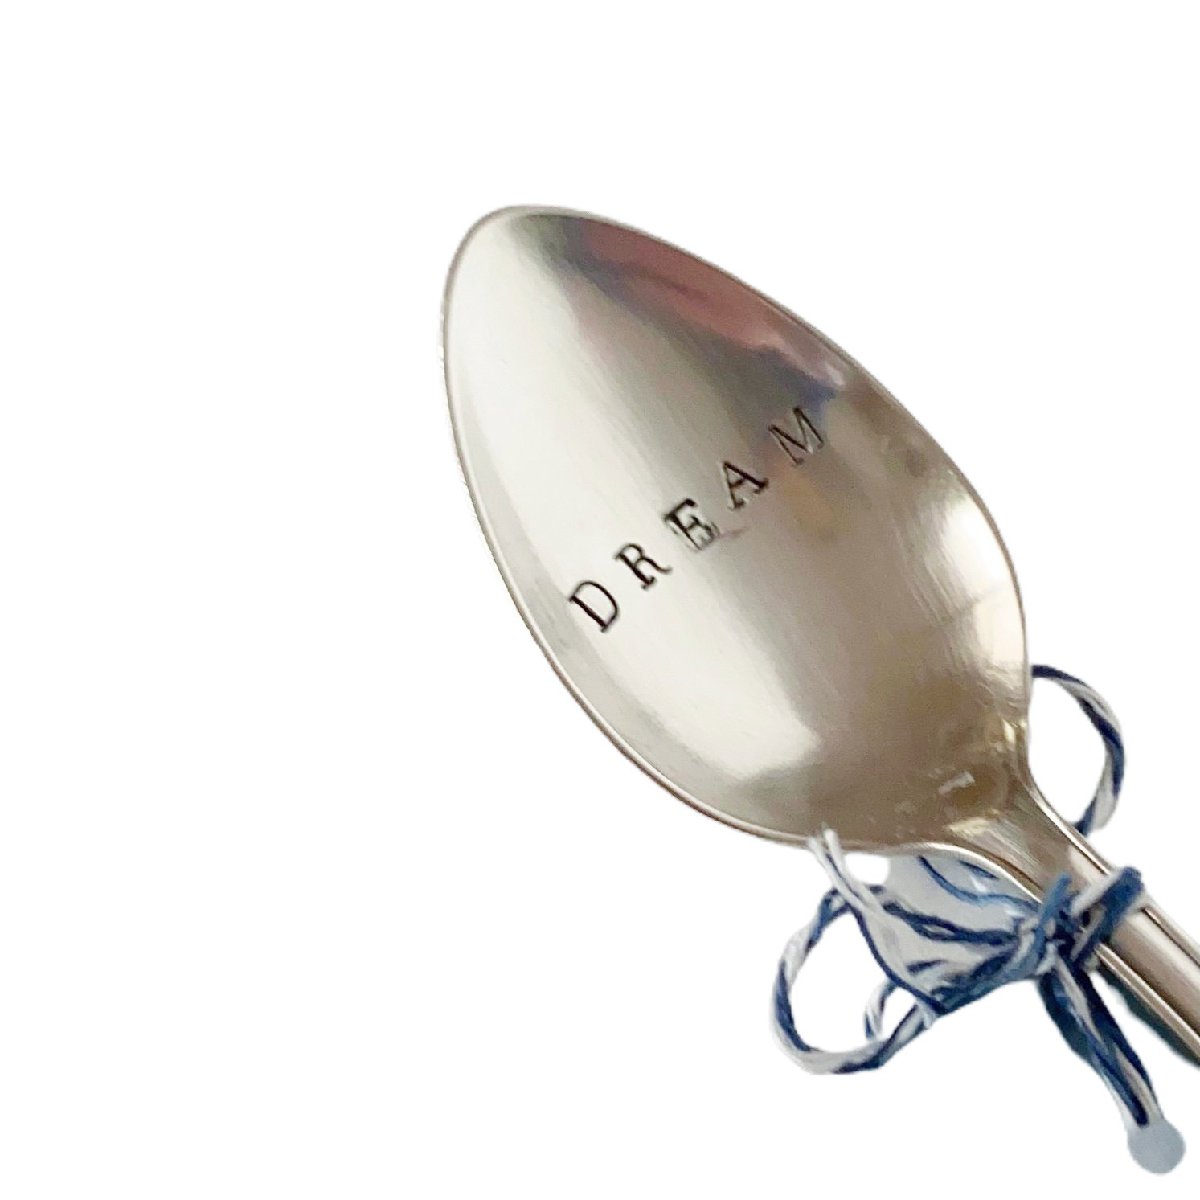 mondocherry - antique silverware teaspoon | "dream" - close